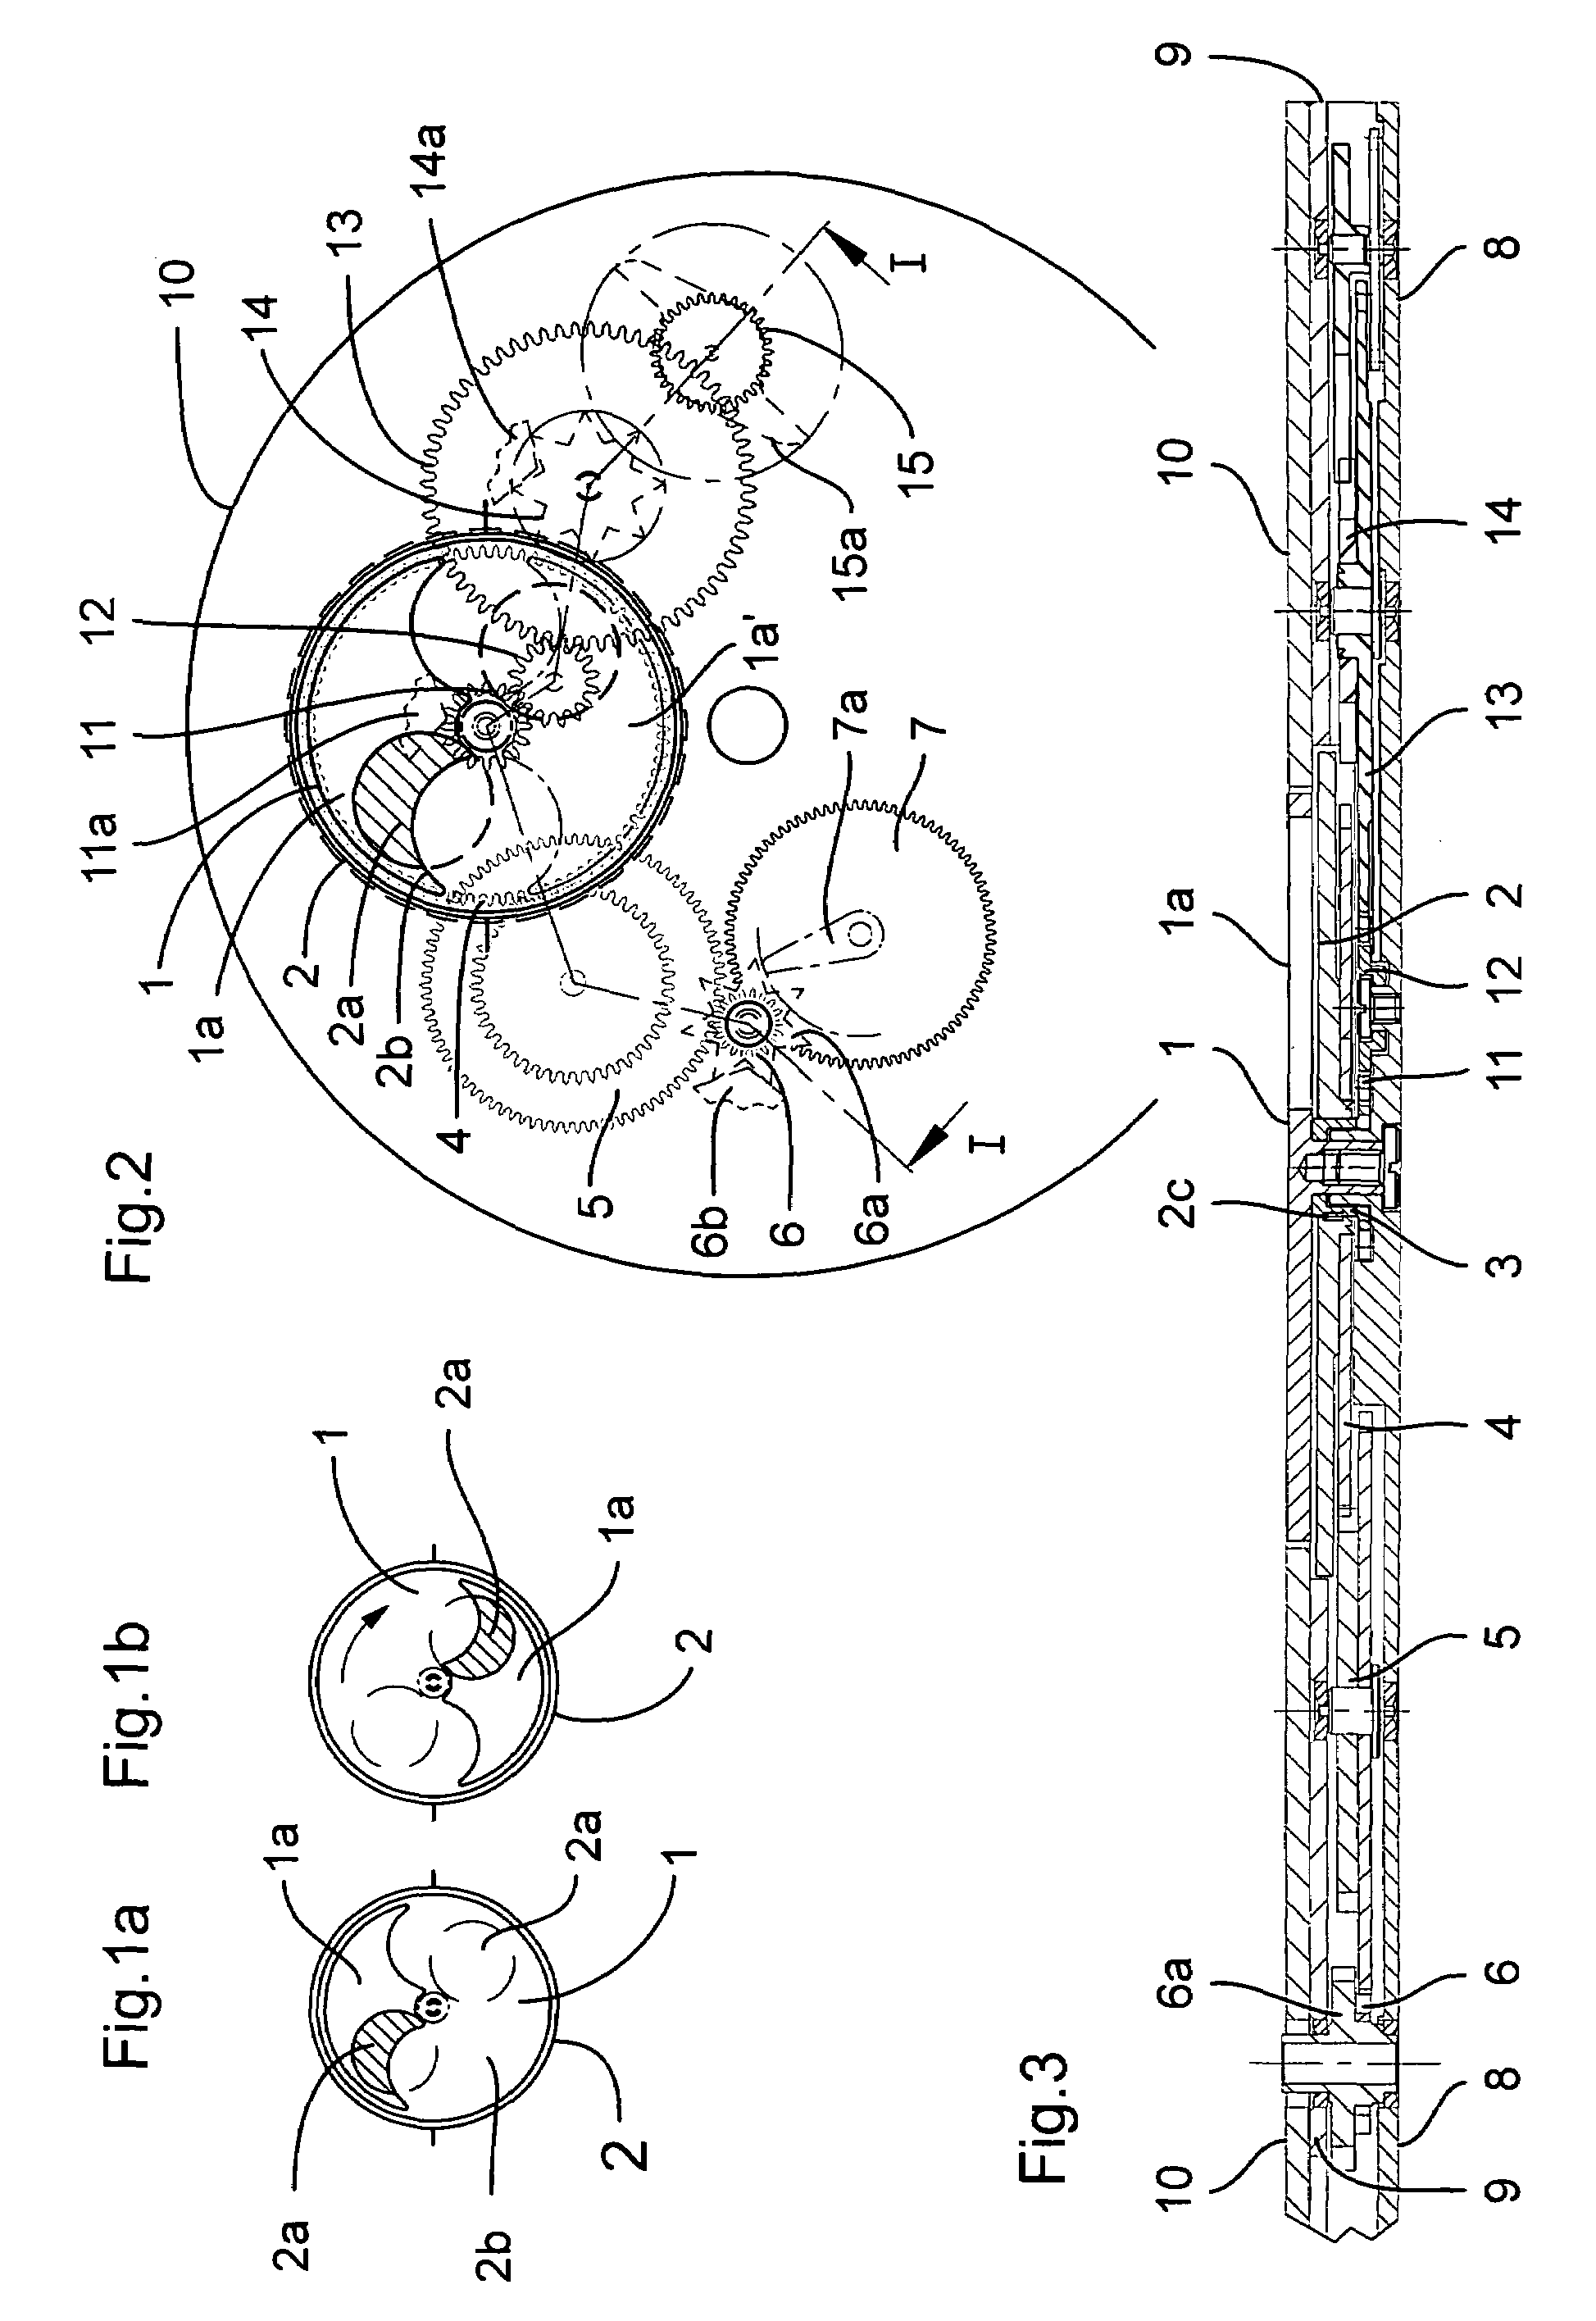 Lunar phase display mechanism